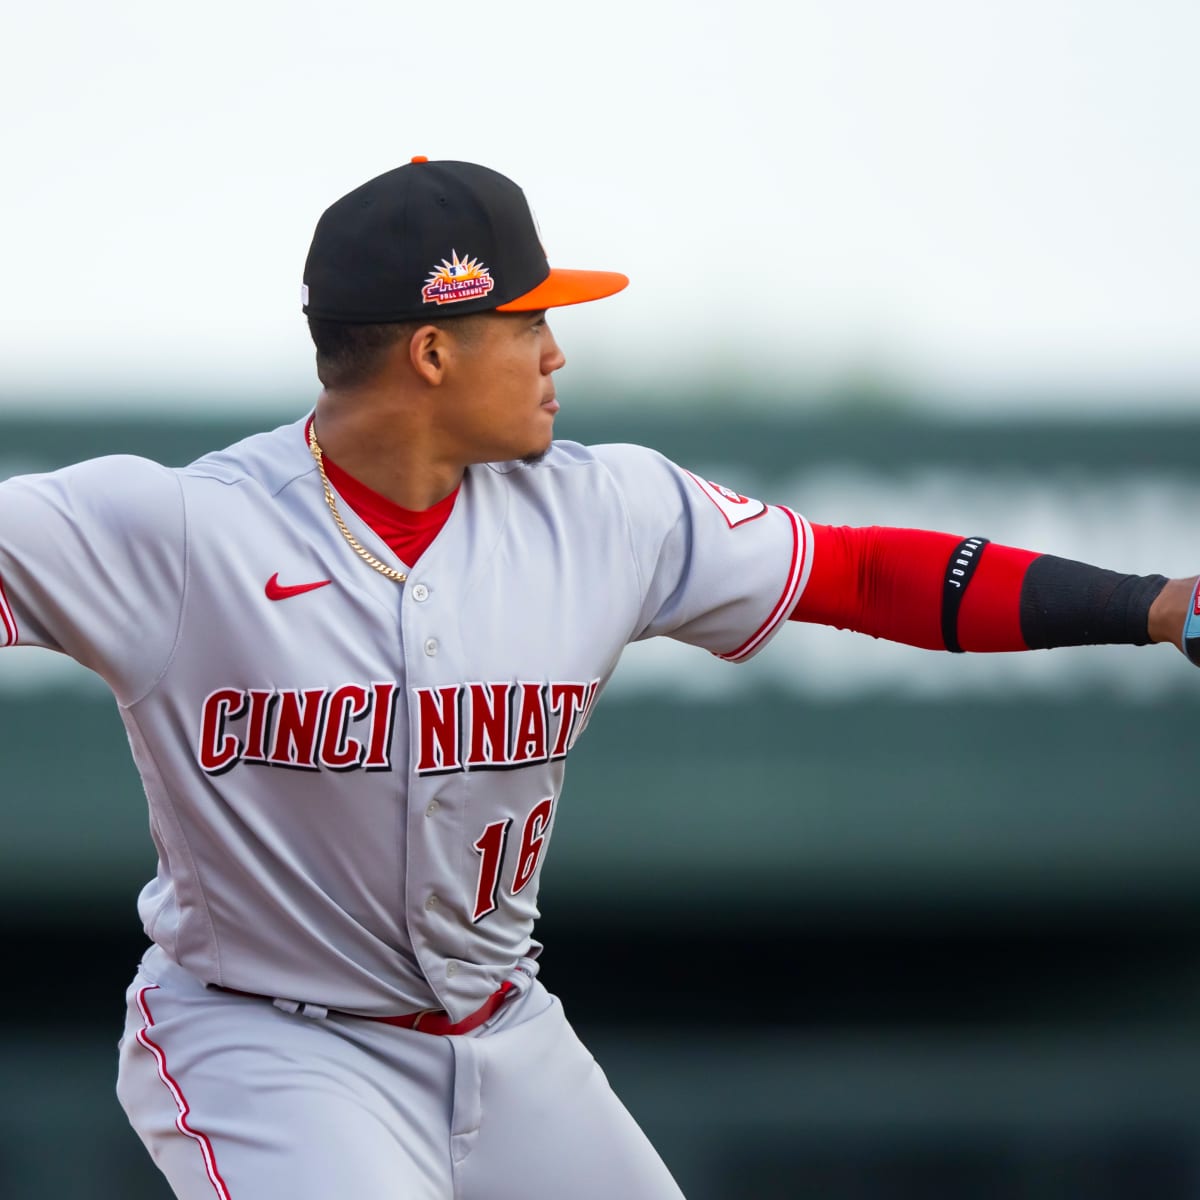 Cincinnati Reds Call Up Top Infield Prospect Noelvi Marte to Make MLB Debut  - Fastball